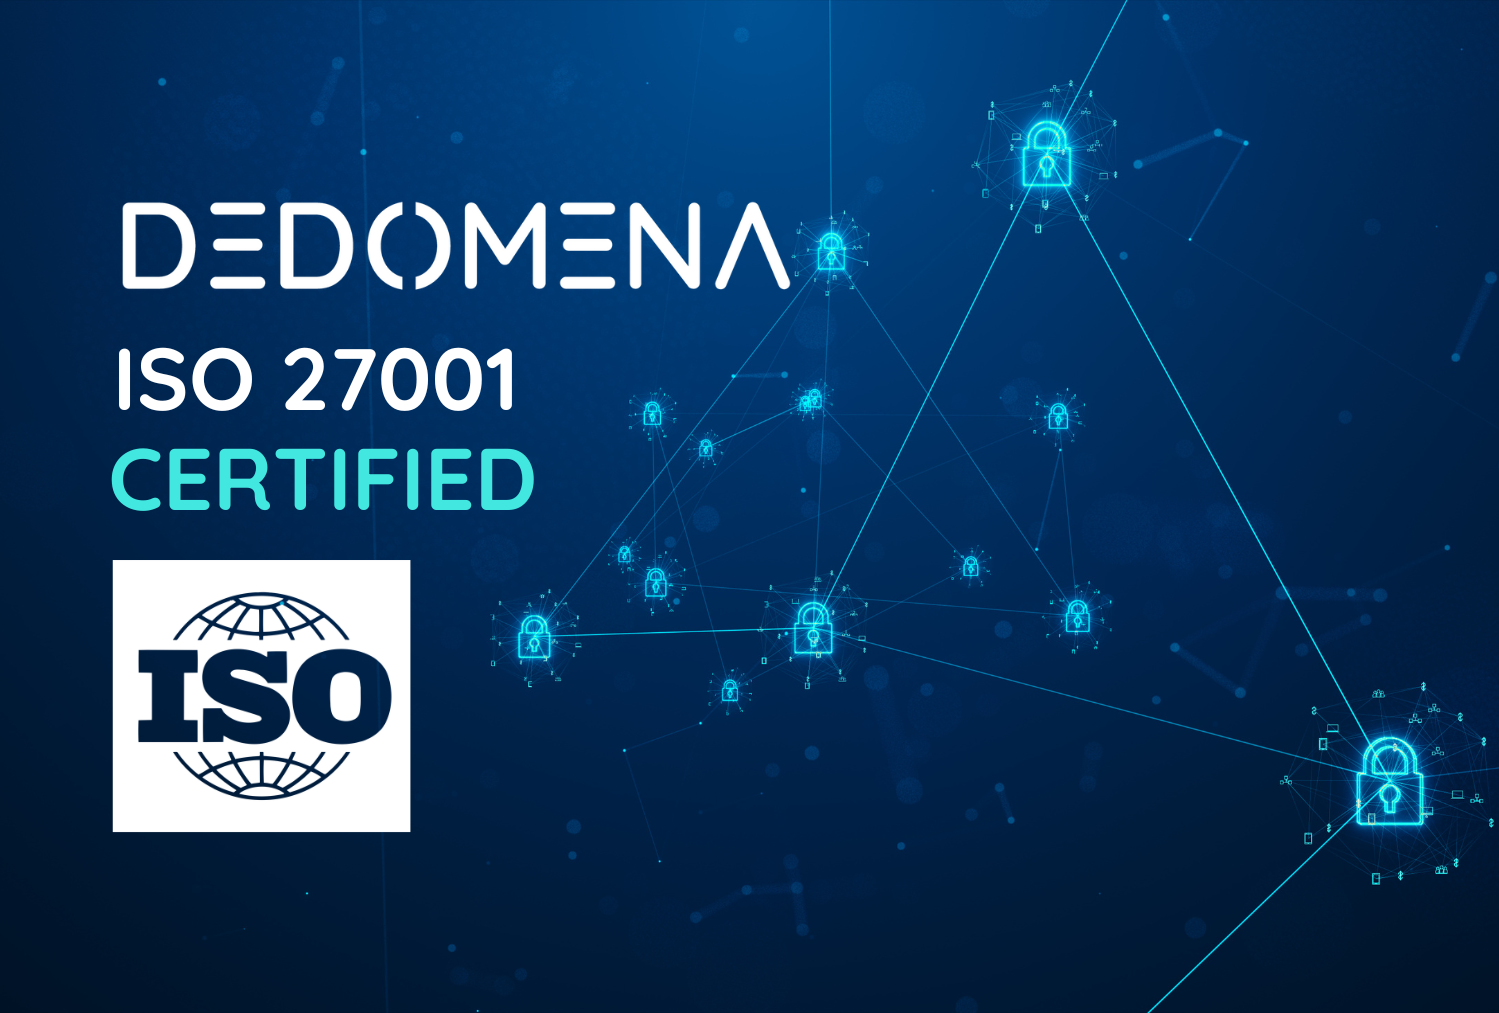 Dedomena awarded ISO 27001 certification